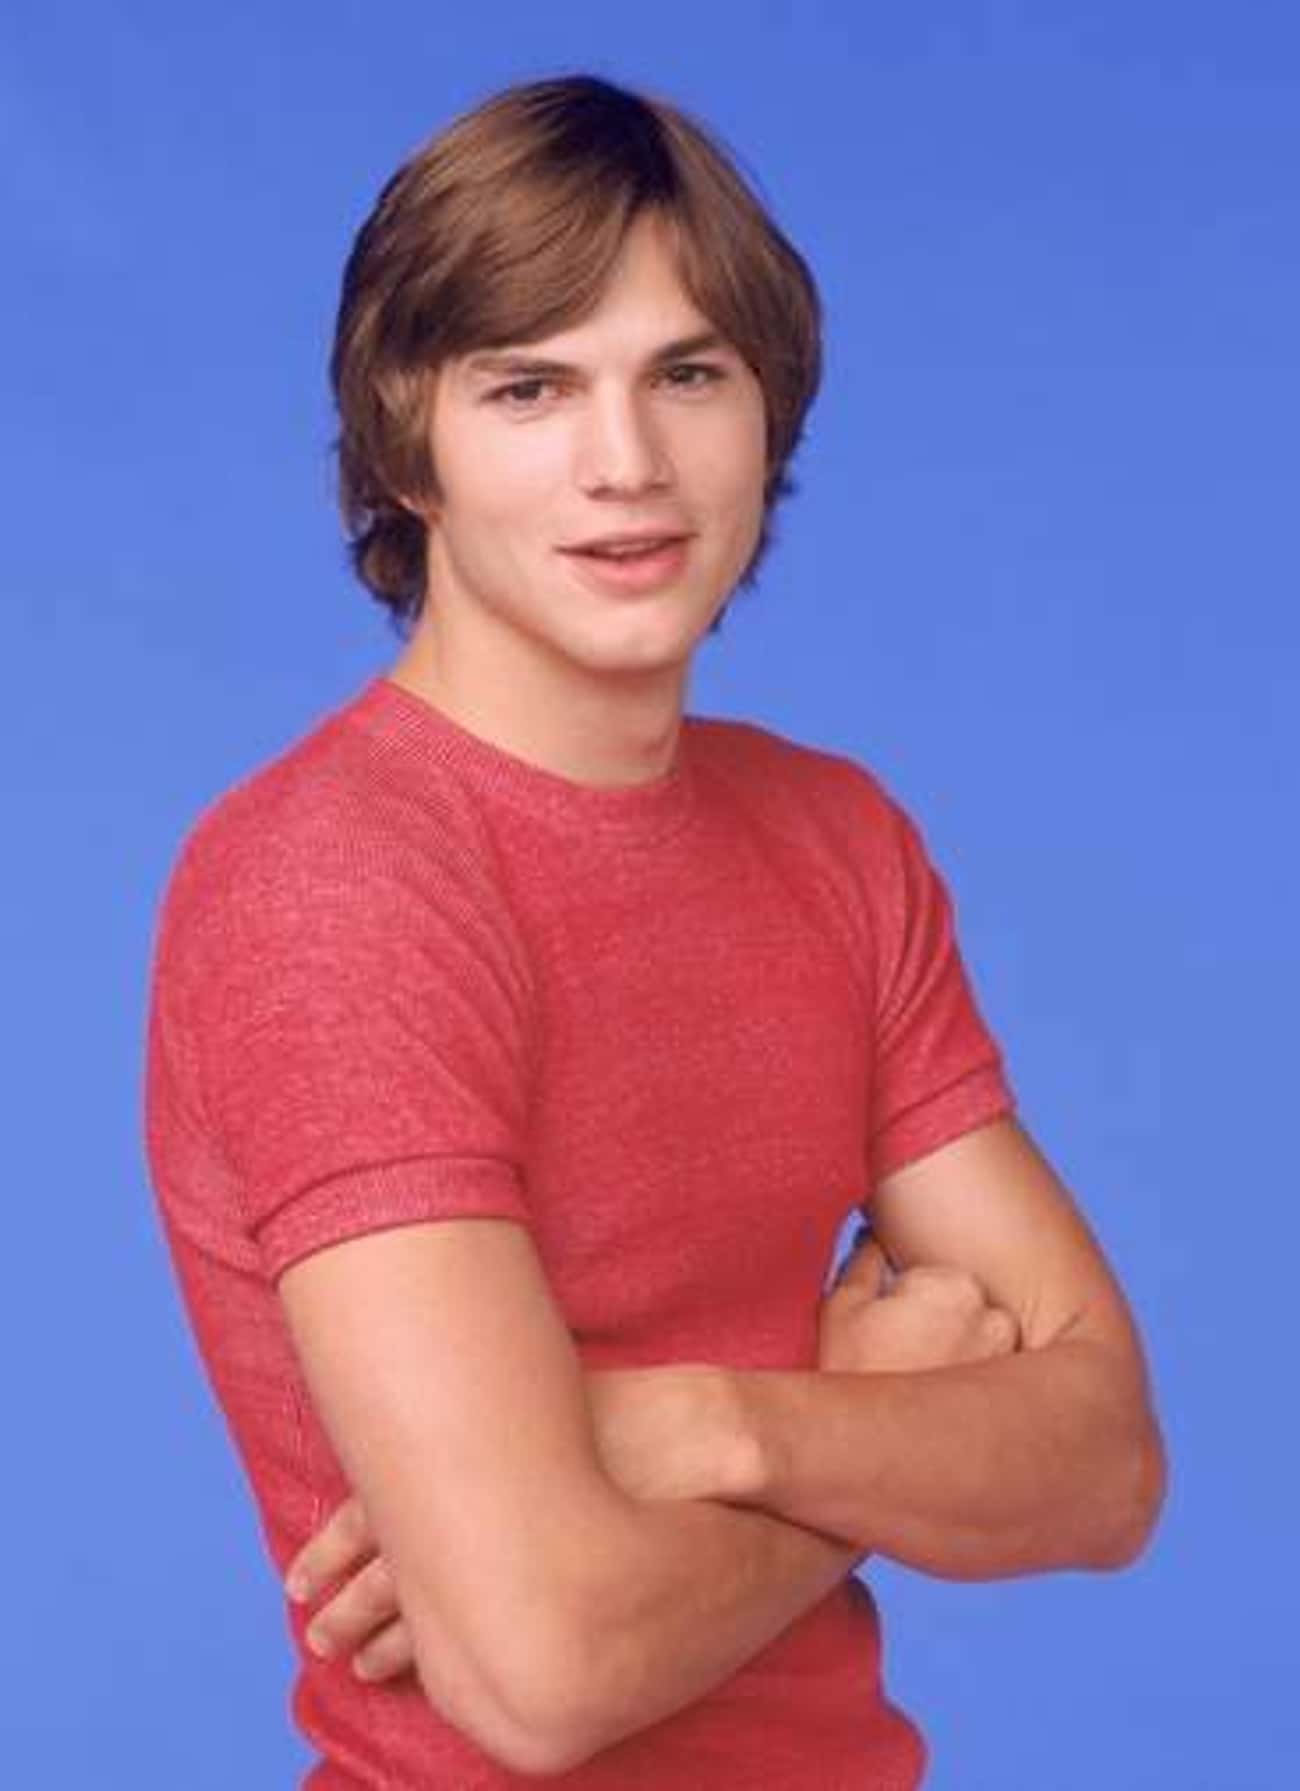 Ashton Kutcher in Red Fit T-Shirt